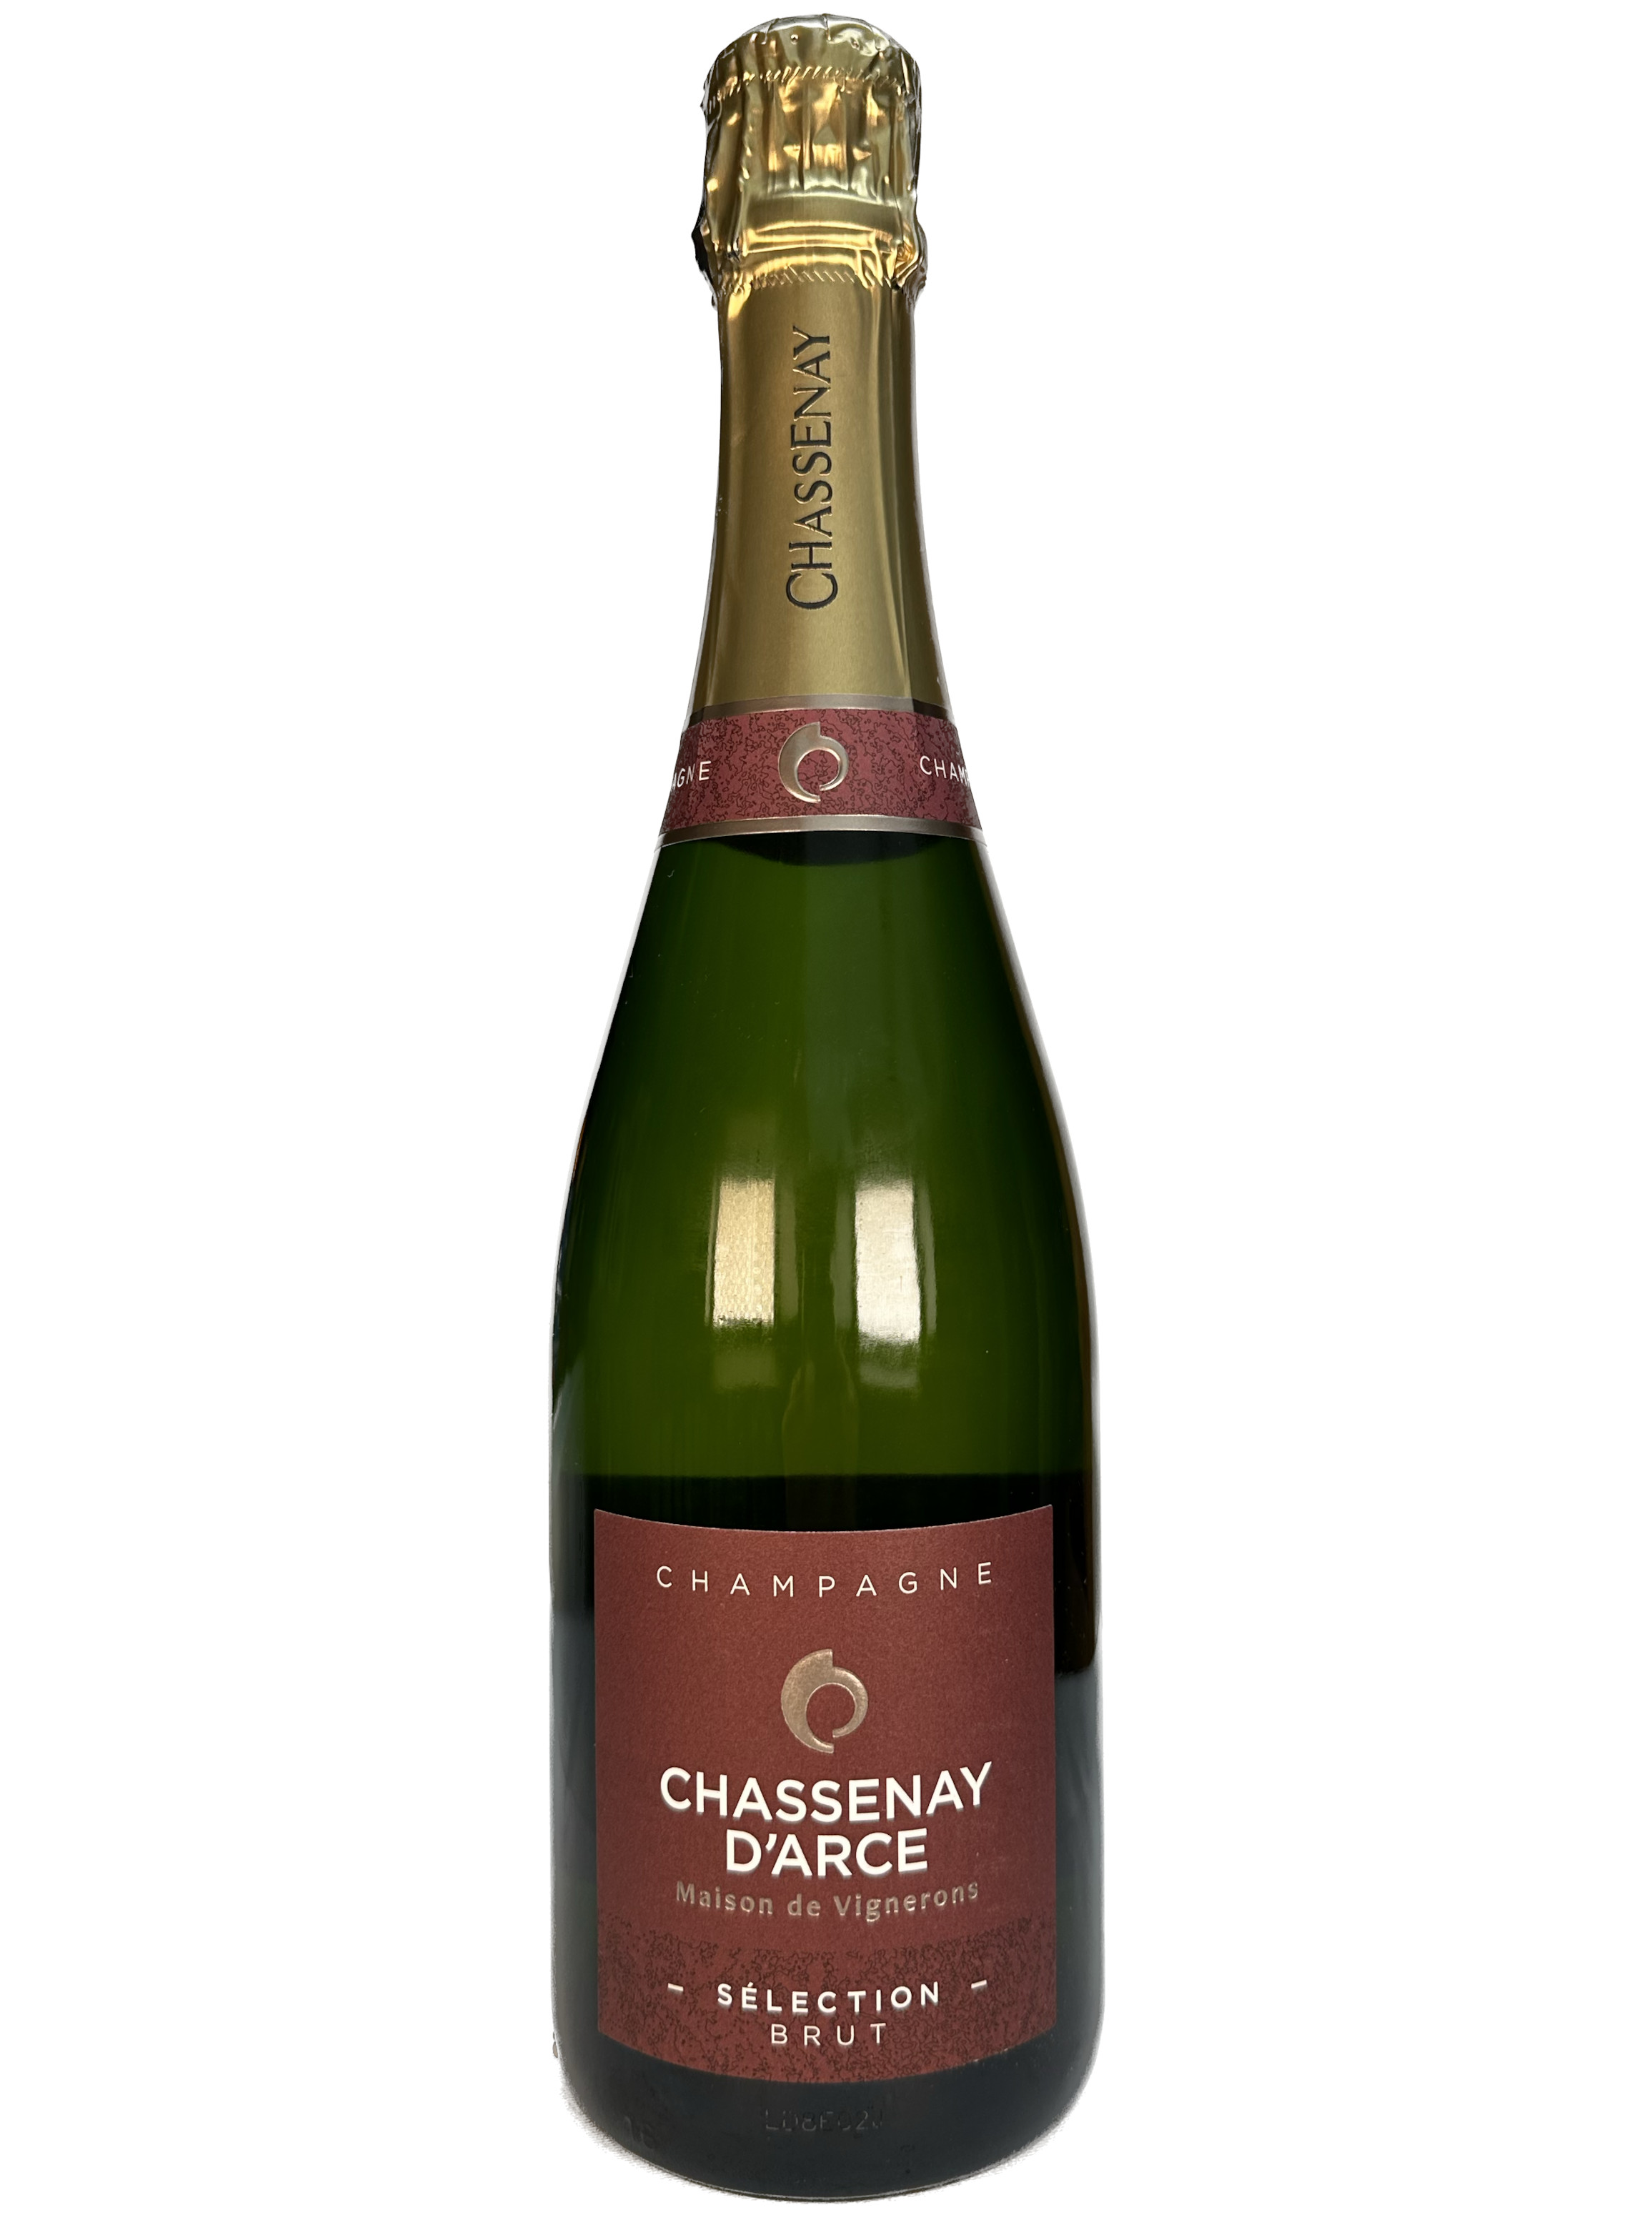 Chassenay D'Arce Champagne Brut